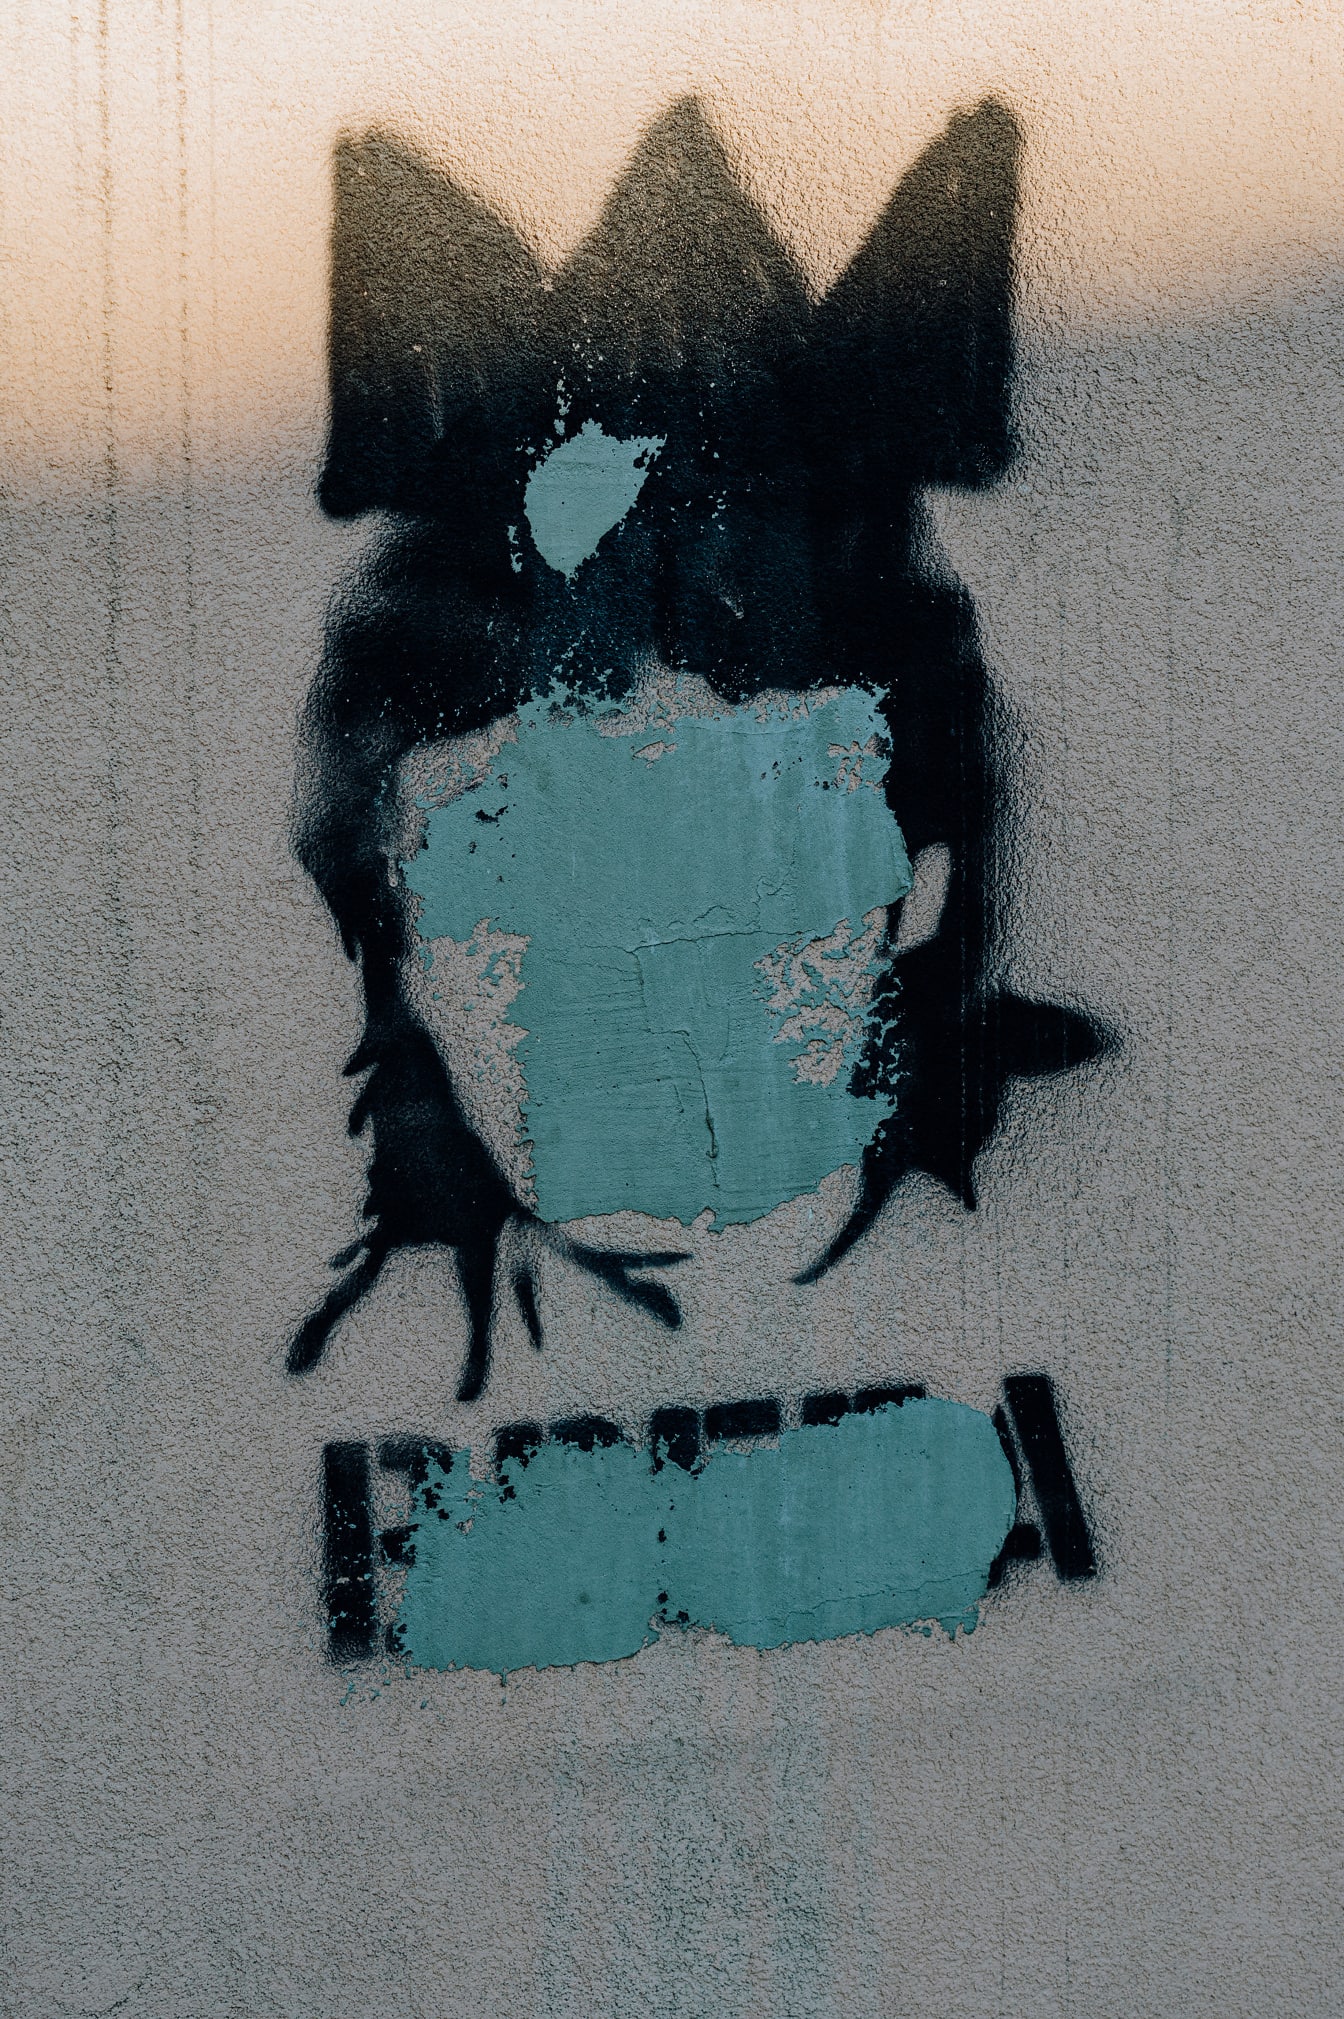 Fekete fejű graffiti túlfestett arccal városi vandalizmus